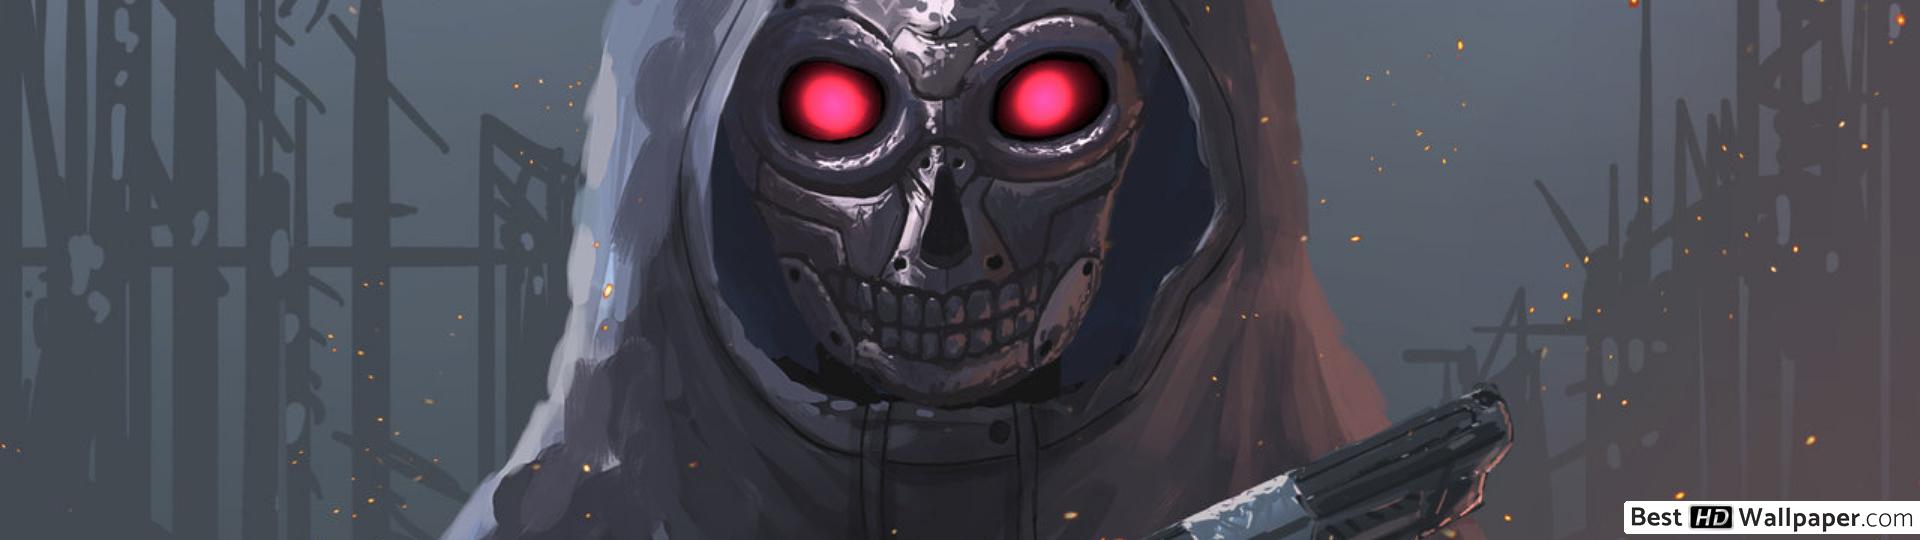 Sao Death Gun Mask - HD Wallpaper 